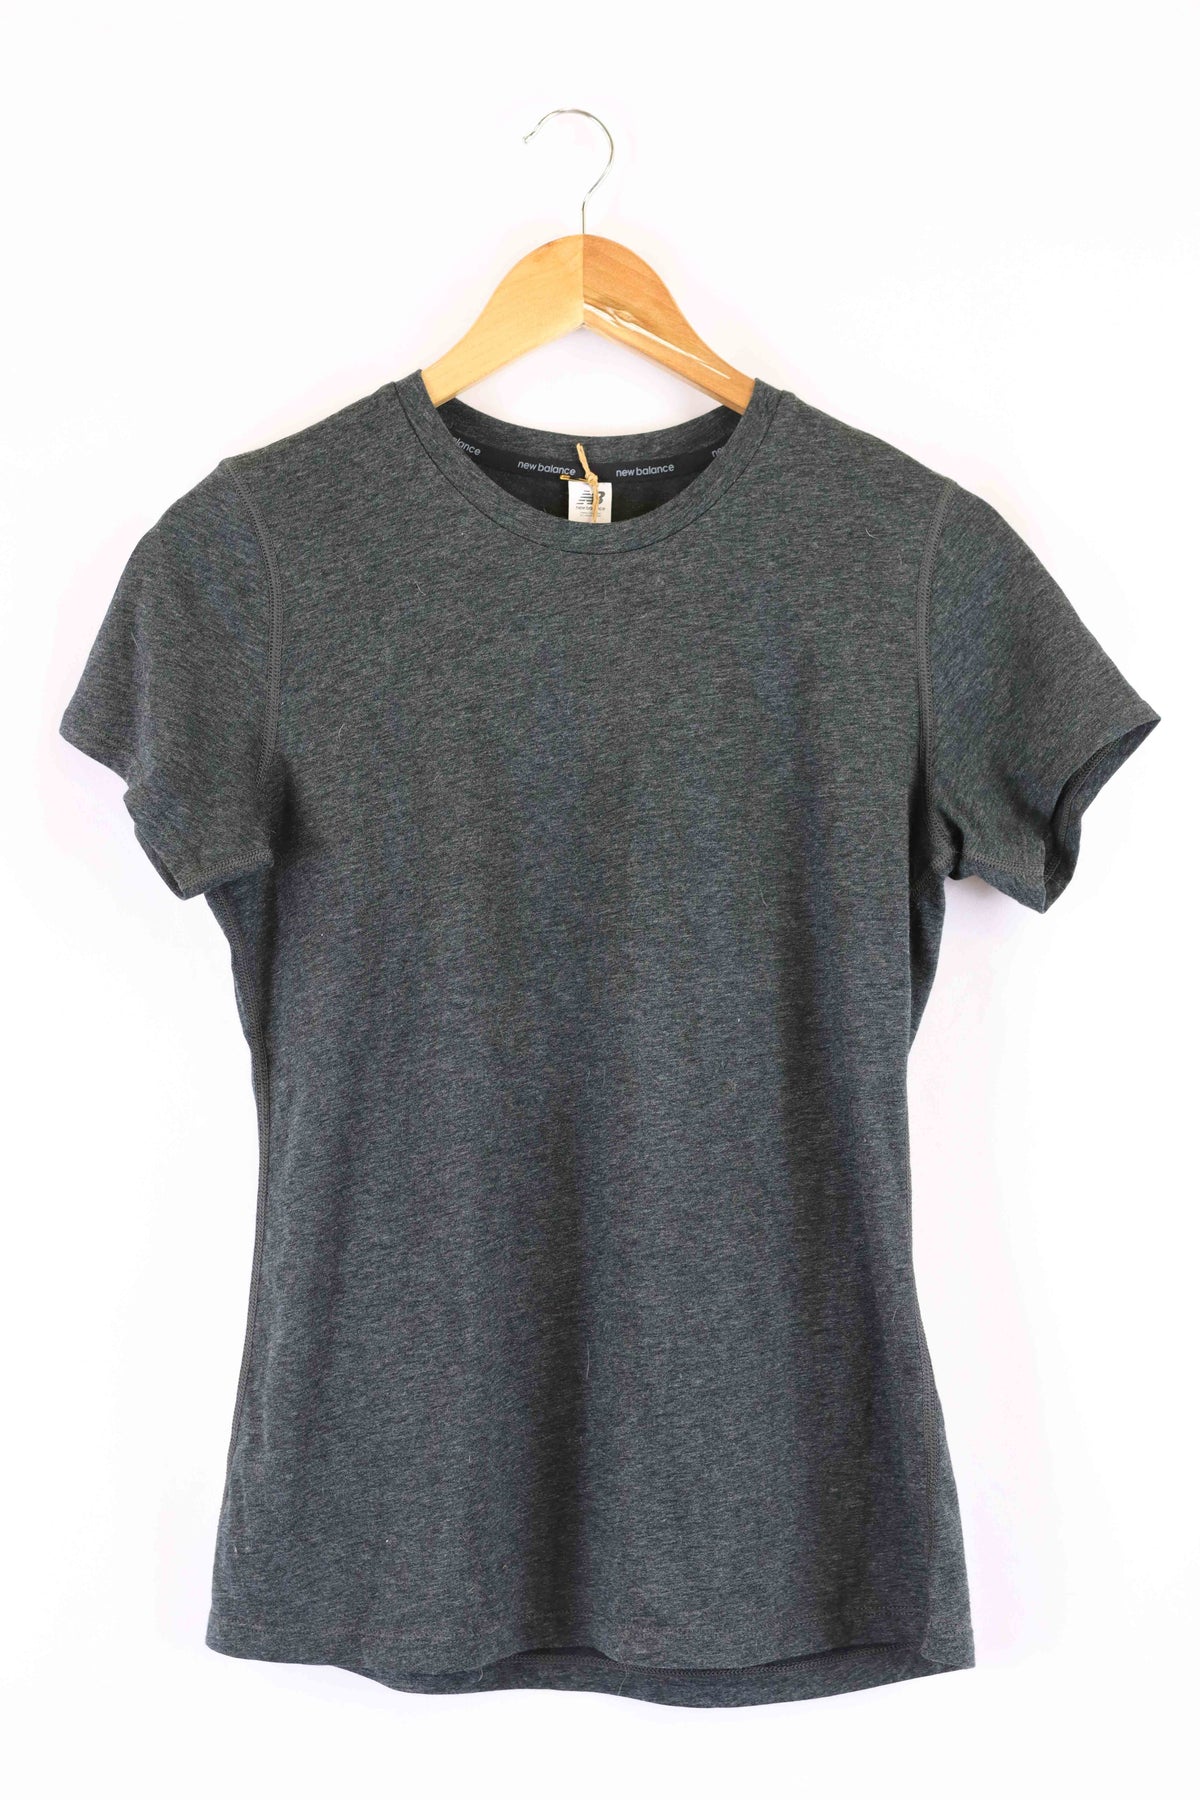 New Balance Grey T-Shirt 10